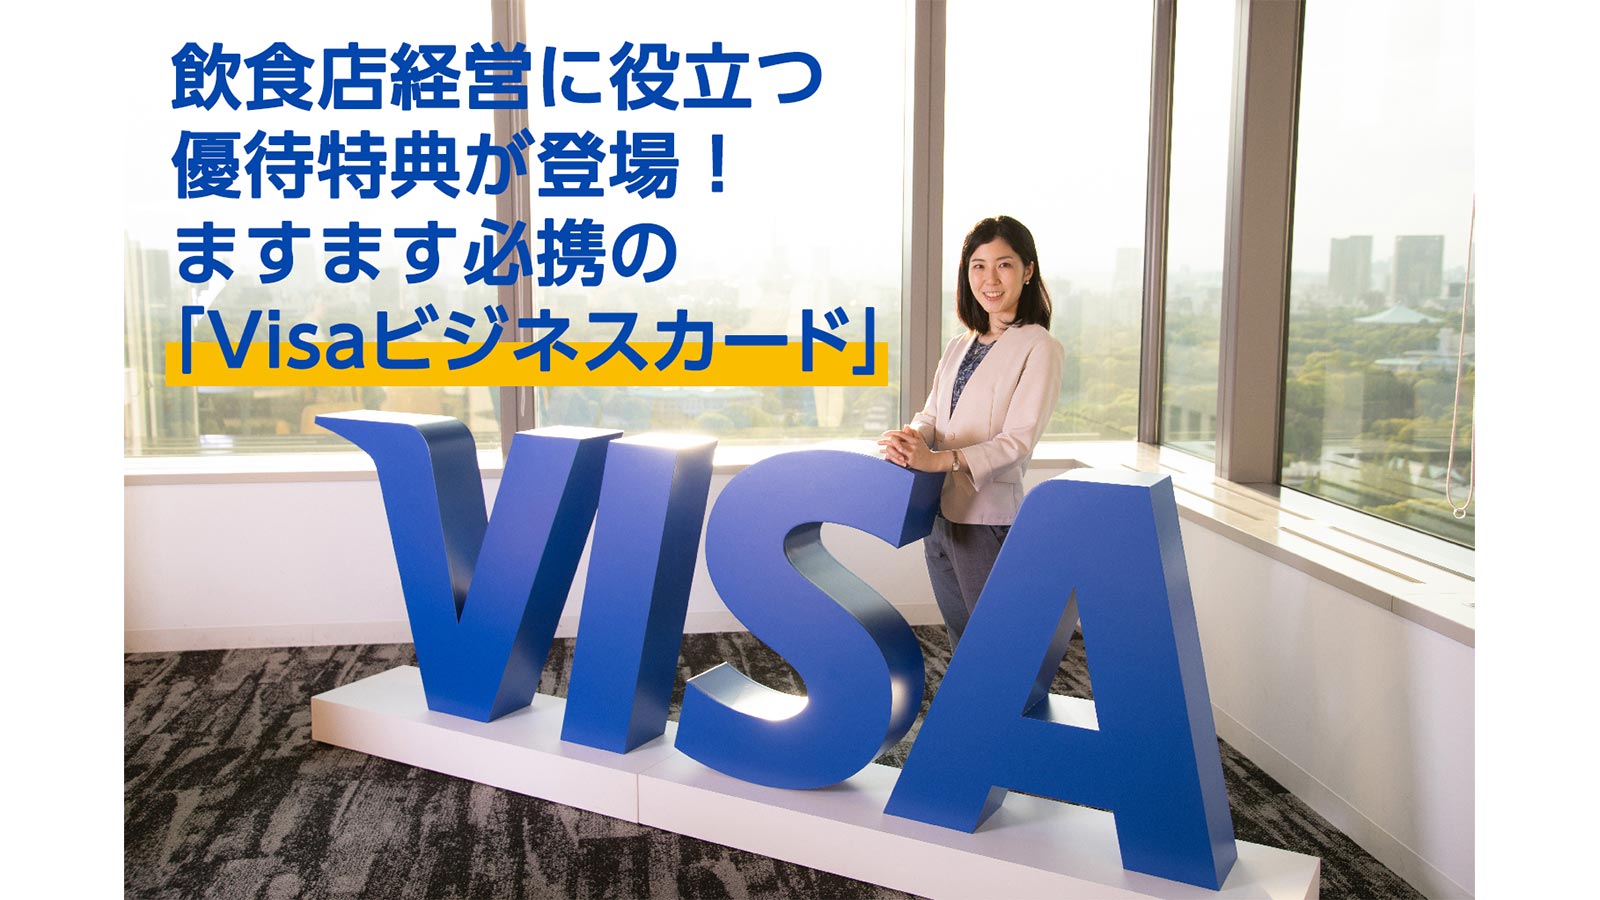 『Visaビジネスカード』の特徴と飲食店運営におけるメリットを、Visa担当者が紹介します。